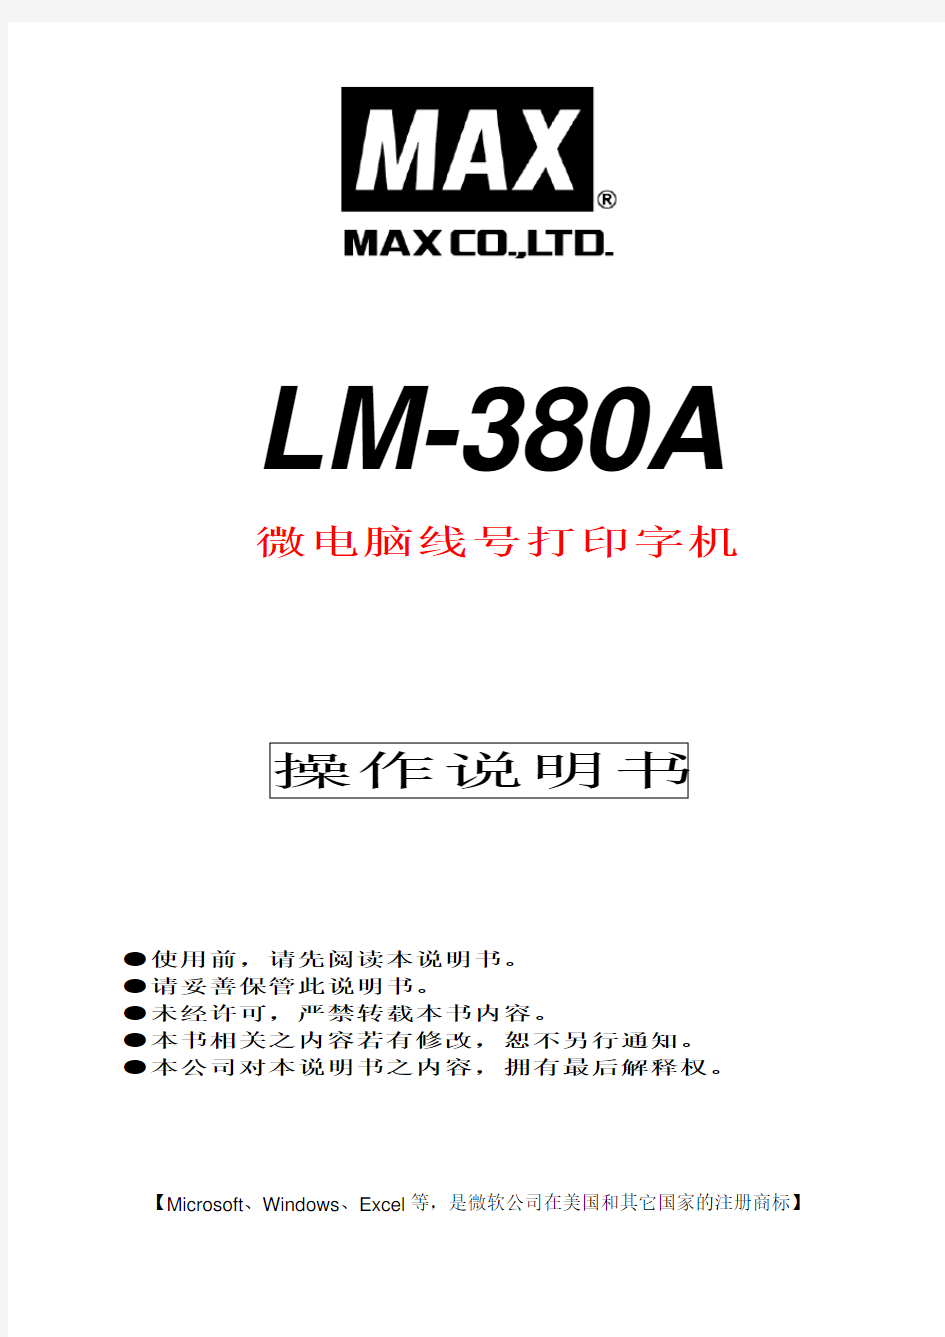 MAX打印机说明书LM-380 AMANUAL (第1部分共5部)